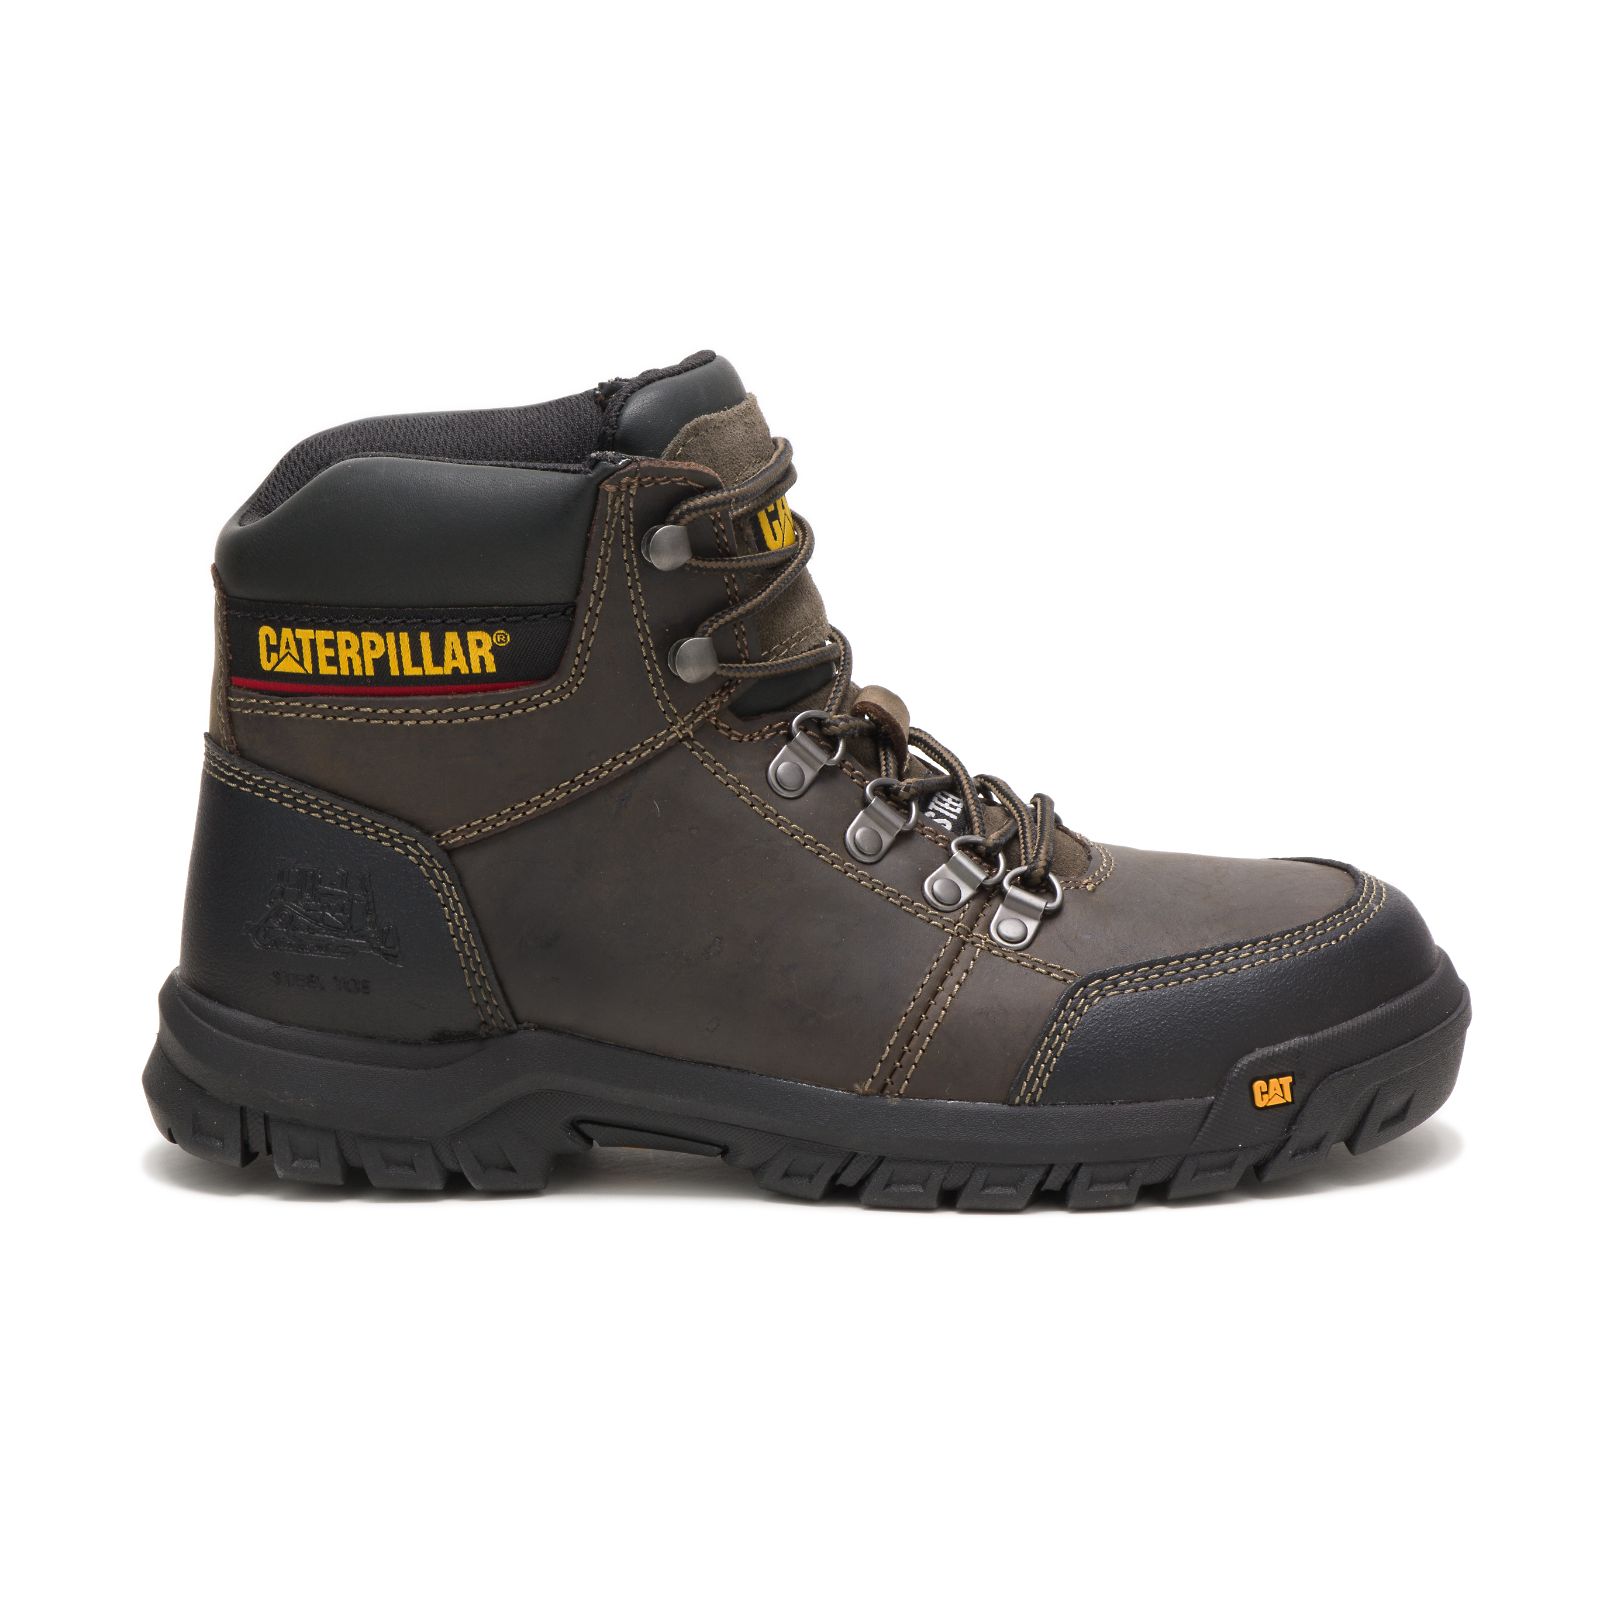 Caterpillar Boots Pakistan - Caterpillar Outline Steel Toe Mens Steel Toe Boots Dark Grey (014673-QMI)